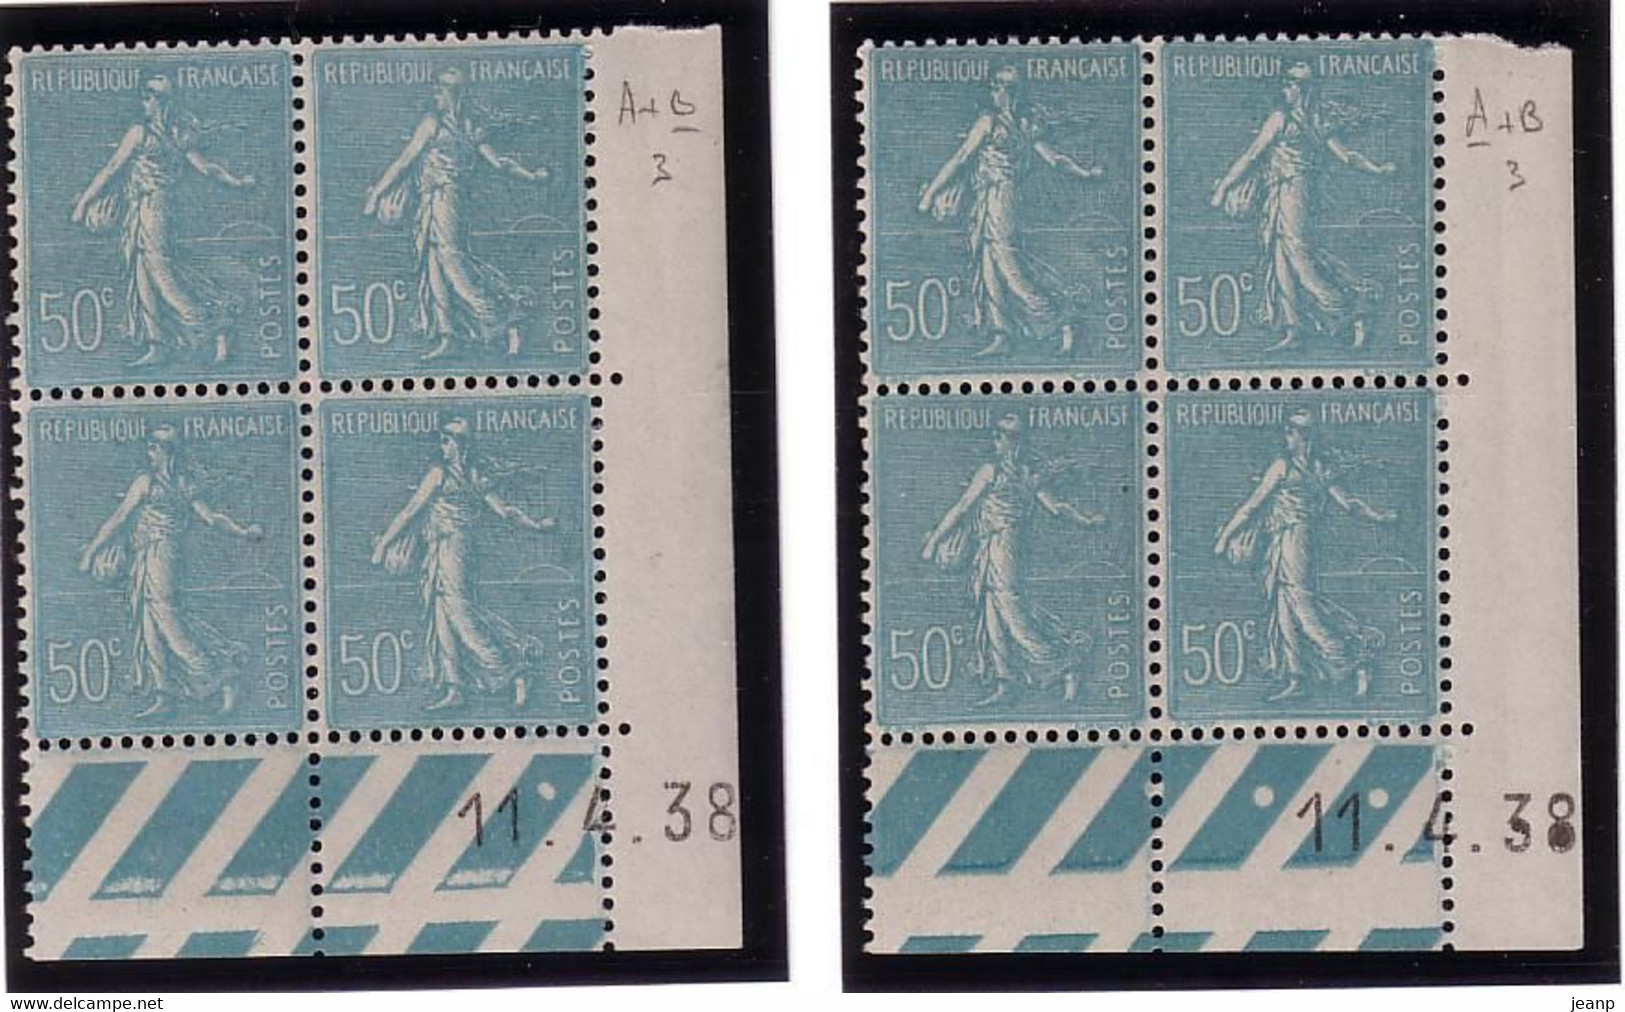 50c Semeuse Lignée, Yvert 362, A+B3 11-4-38, Cote 40 Euros, ** - ....-1929